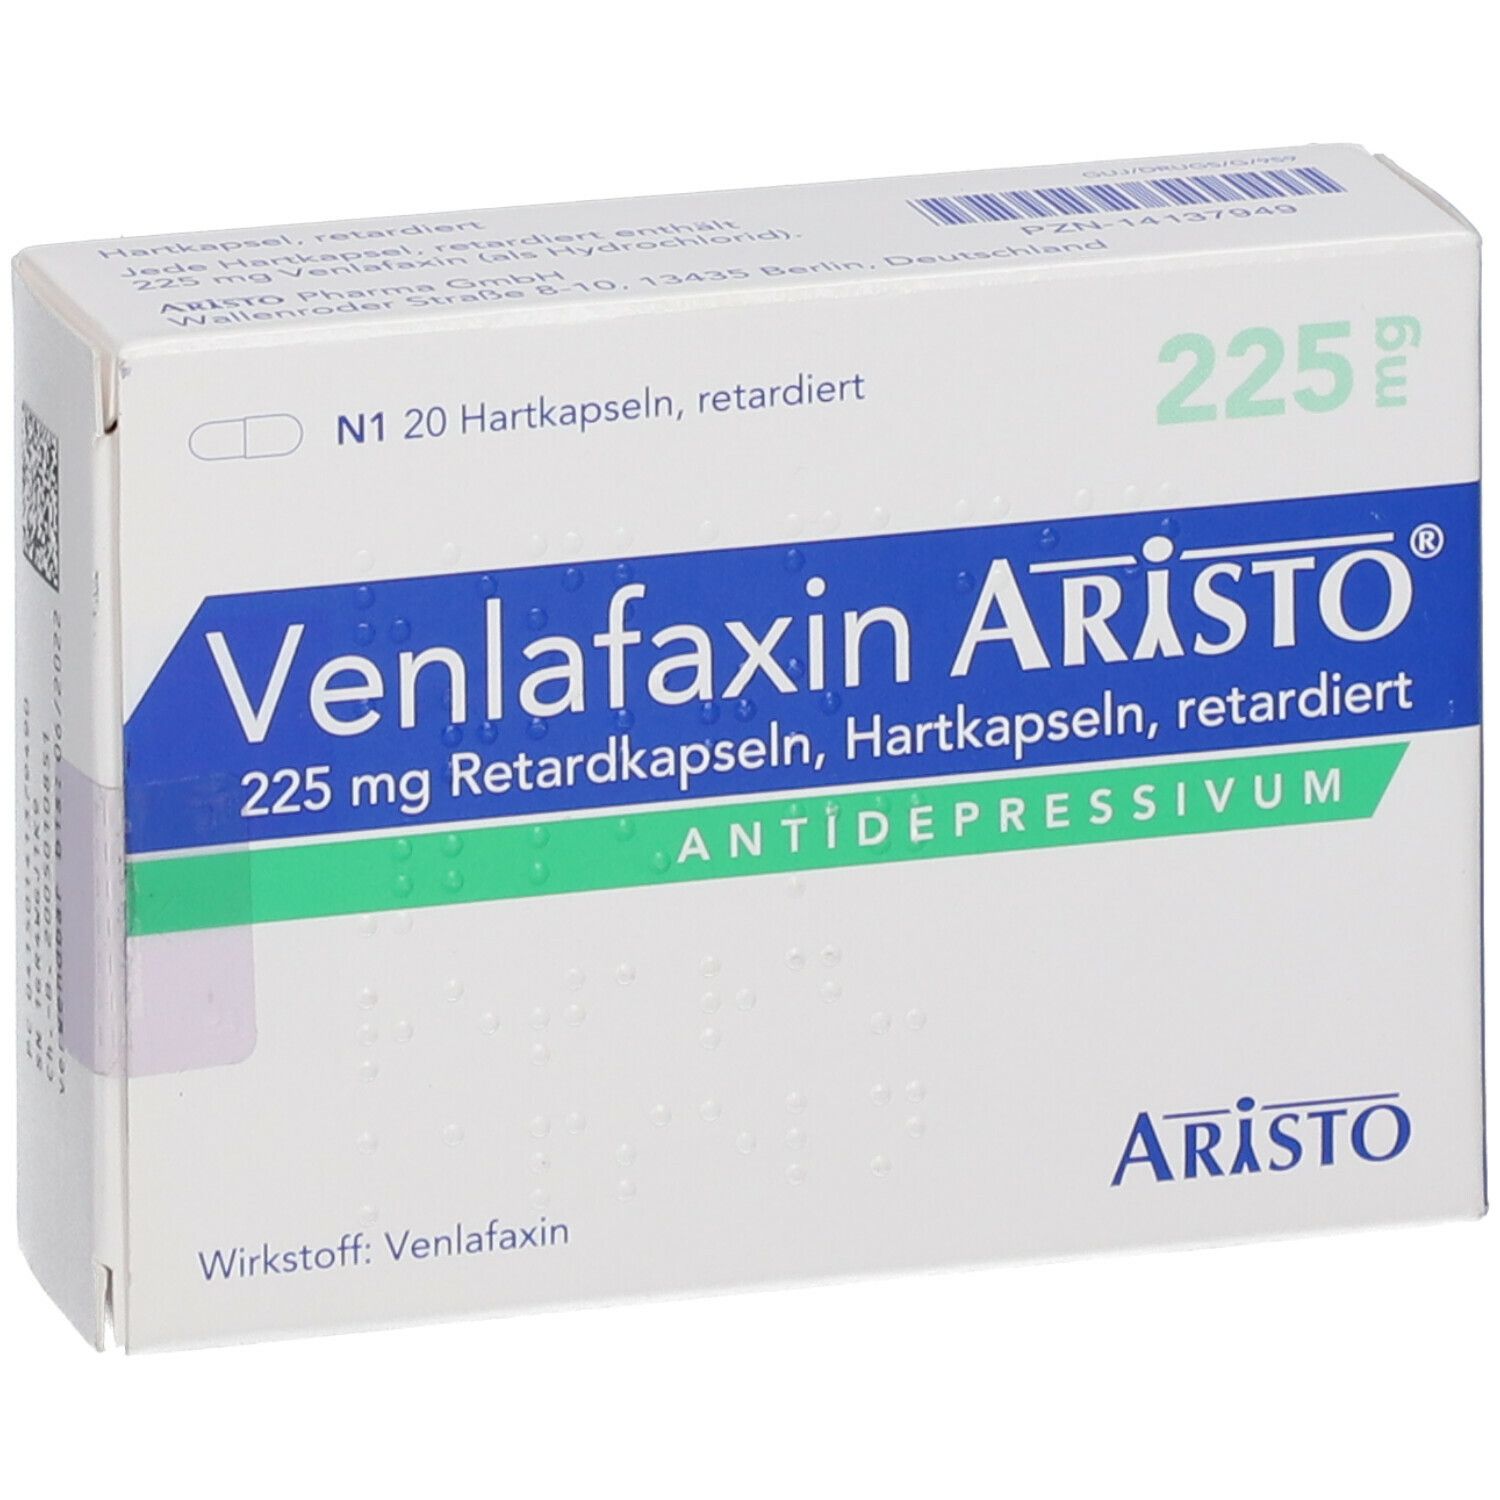 Venlafaxin Aristo® 225 mg